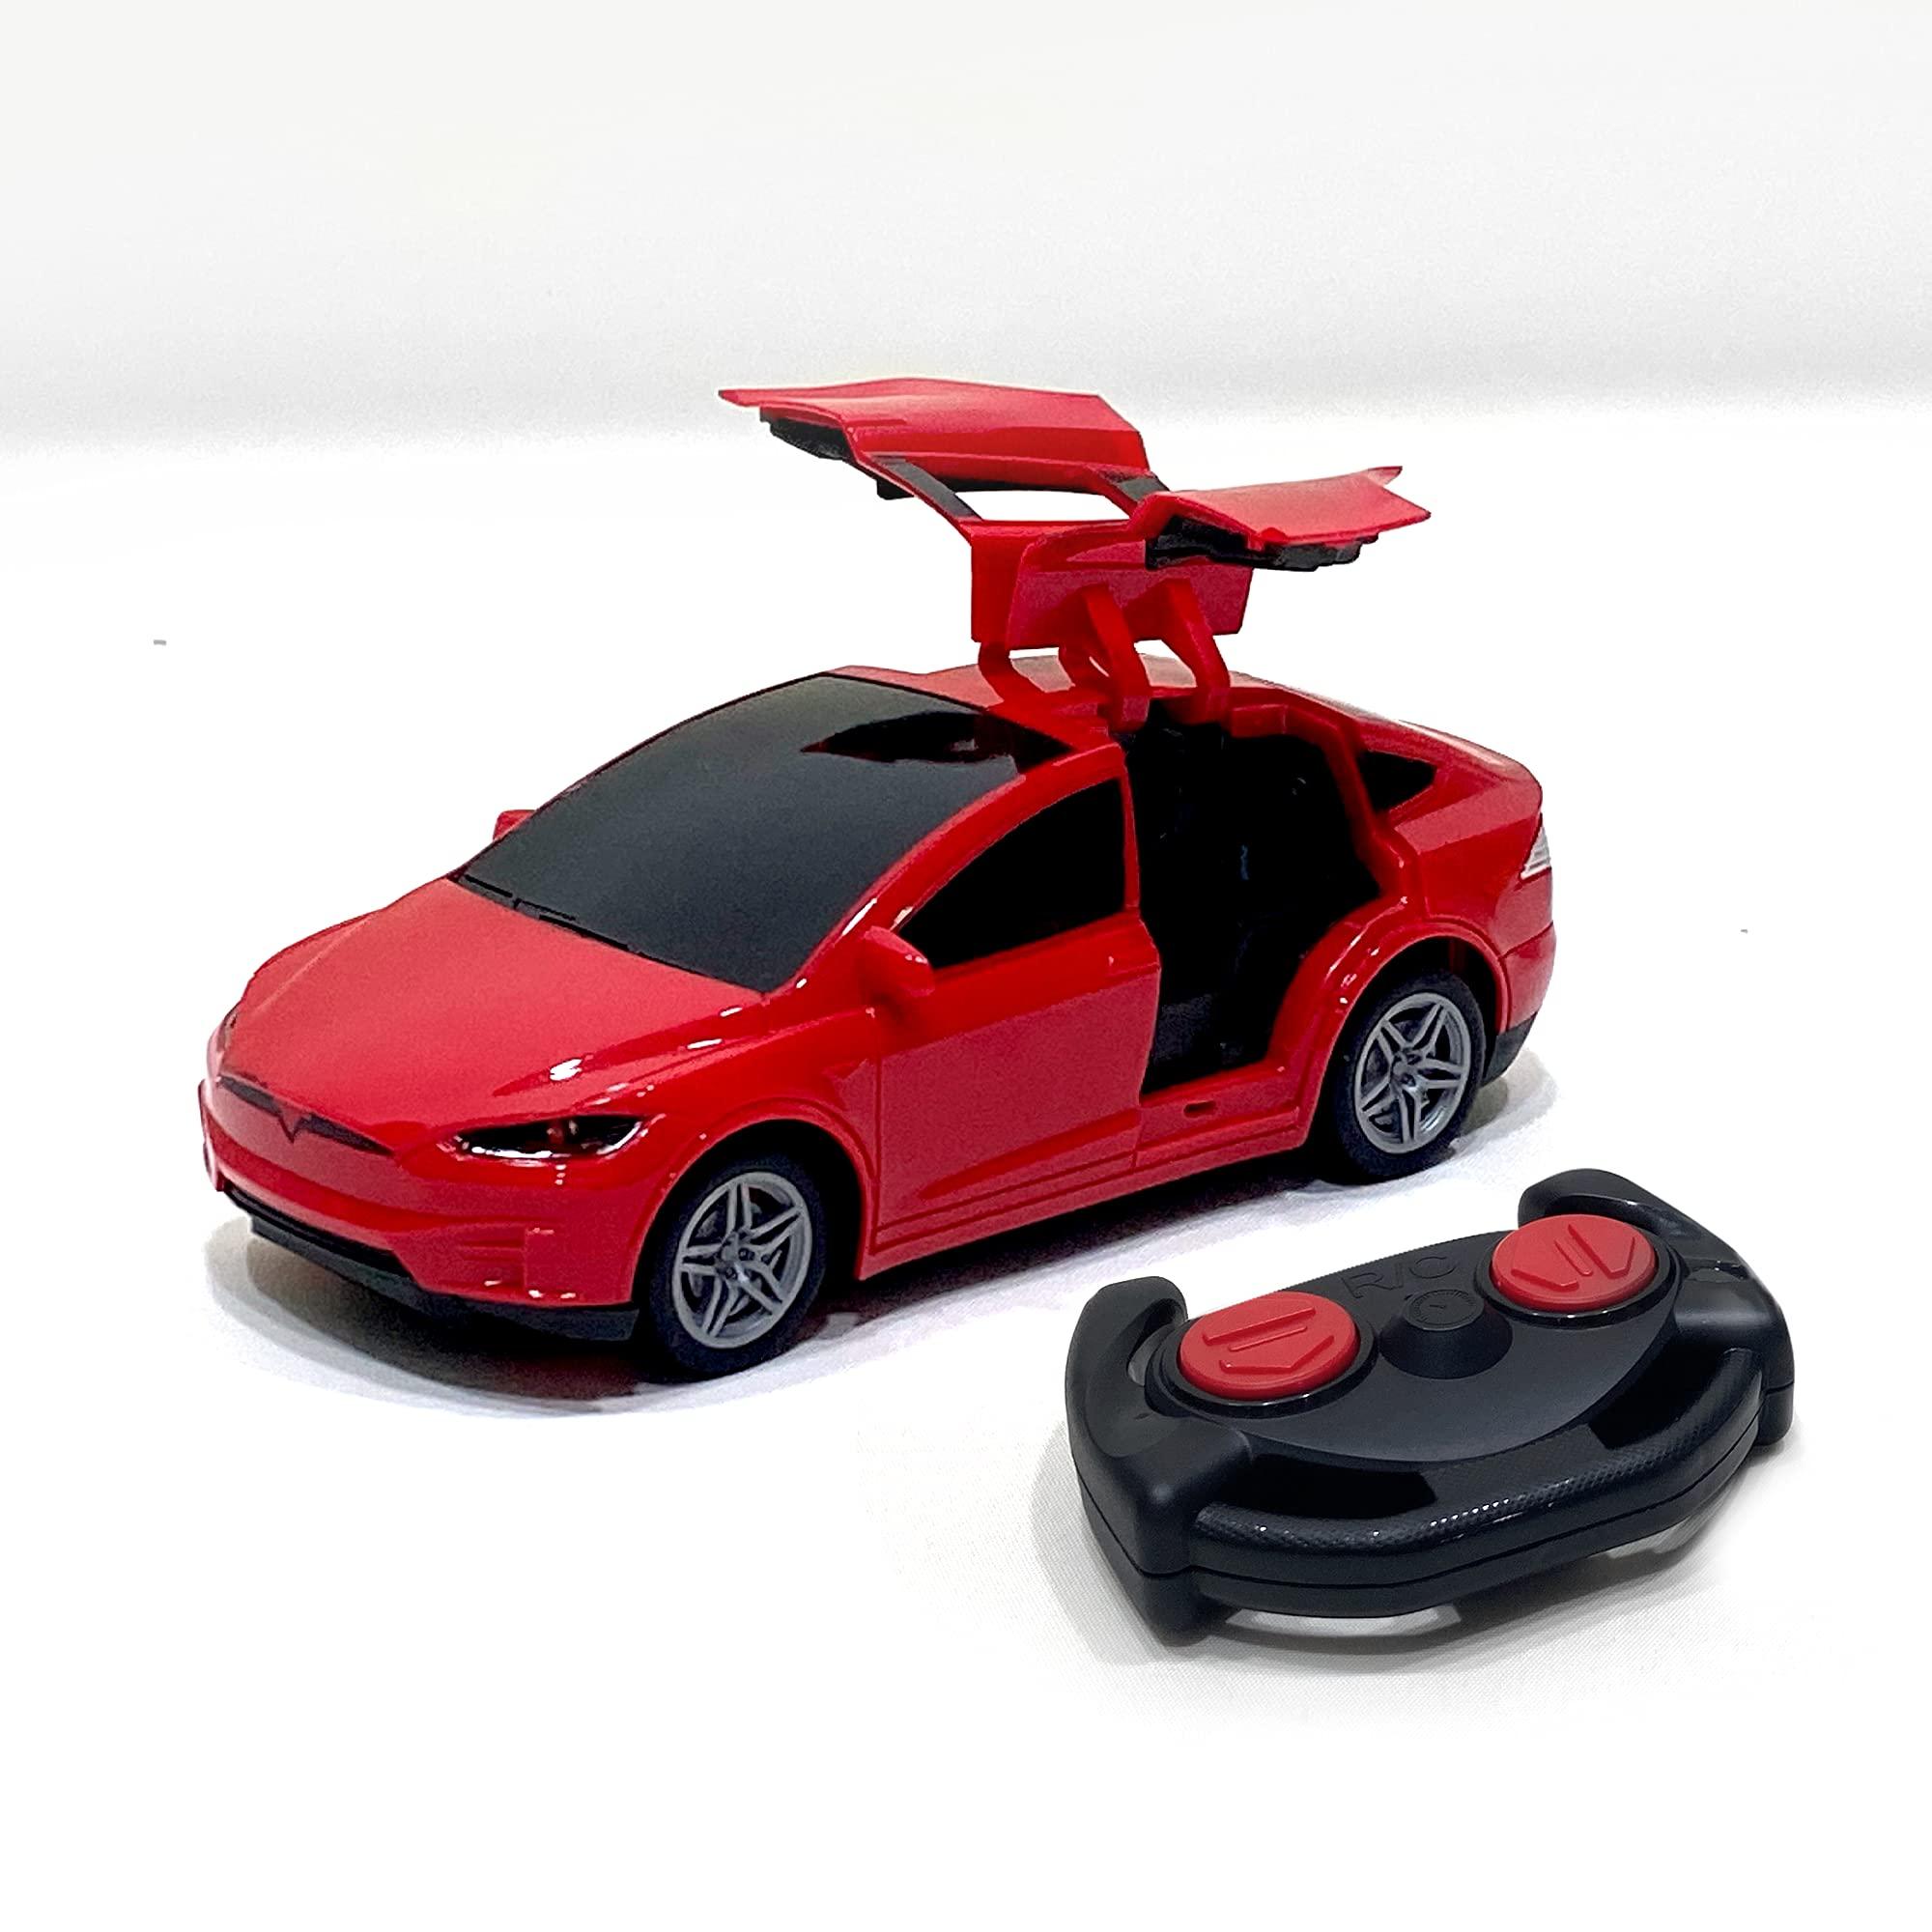 Remote Control Car Tesla: Impressive specs and features of the remote control car Tesla